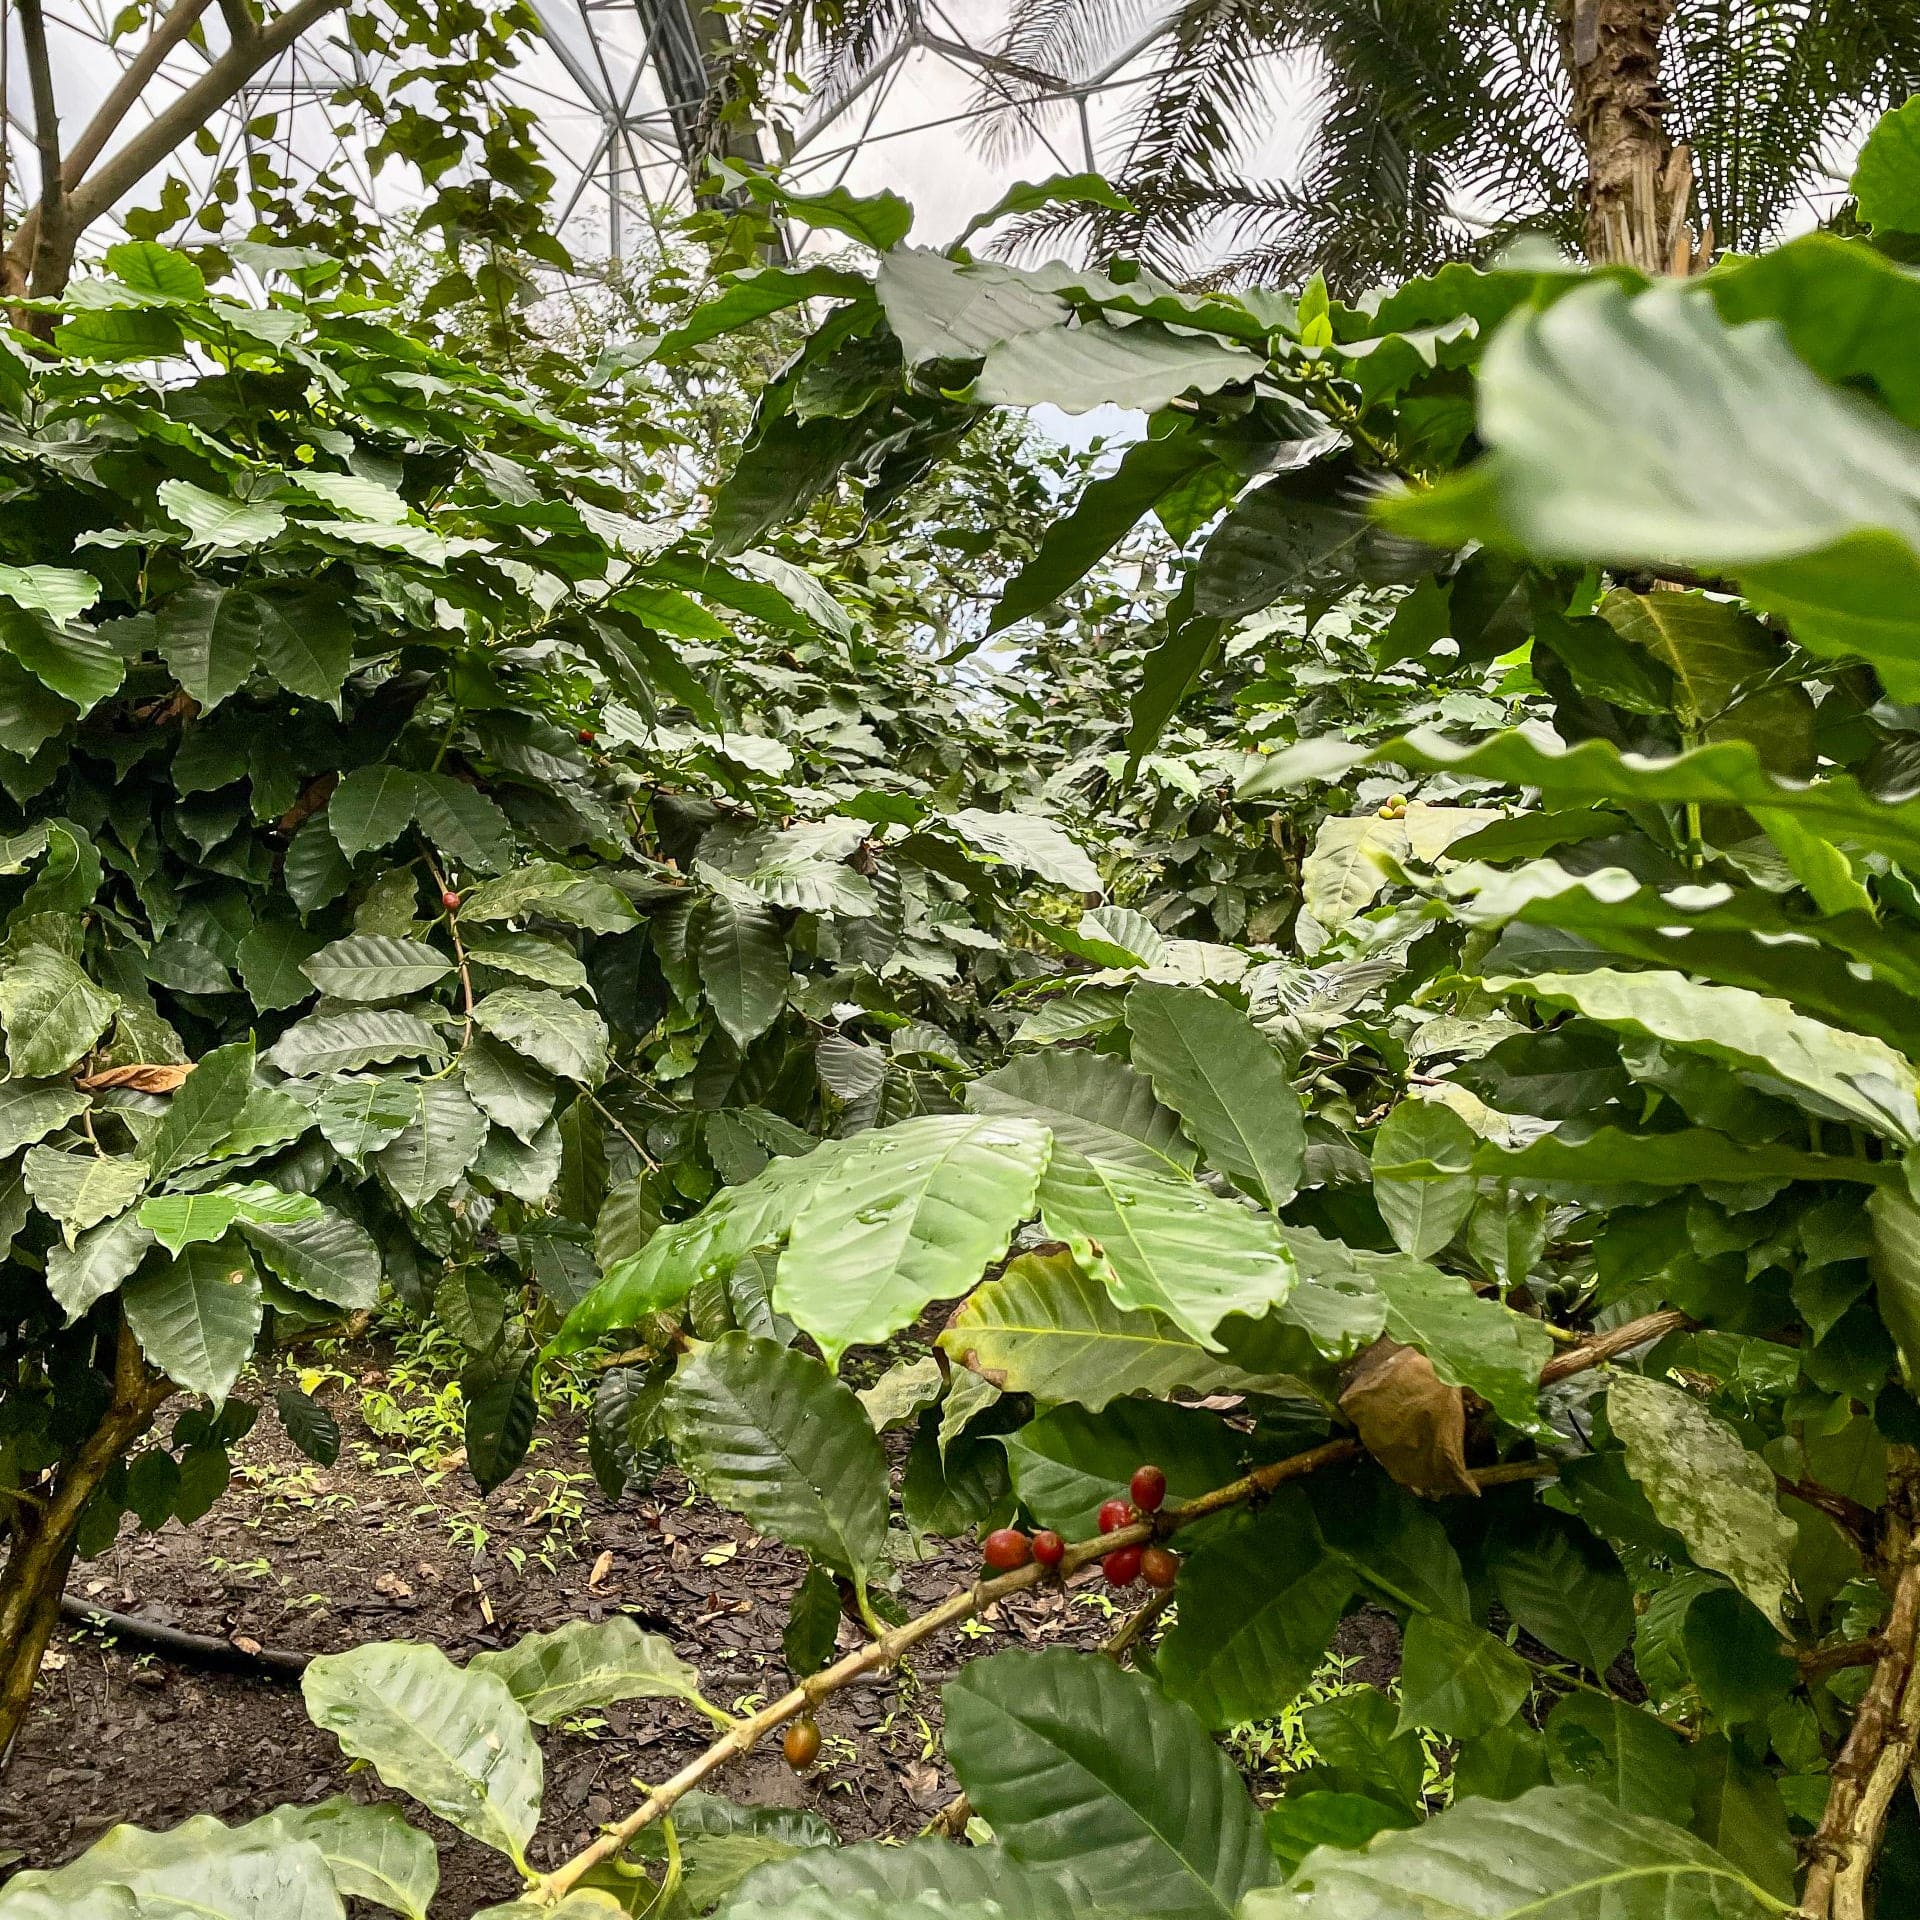 Arabica coffee plant - Eden-grown